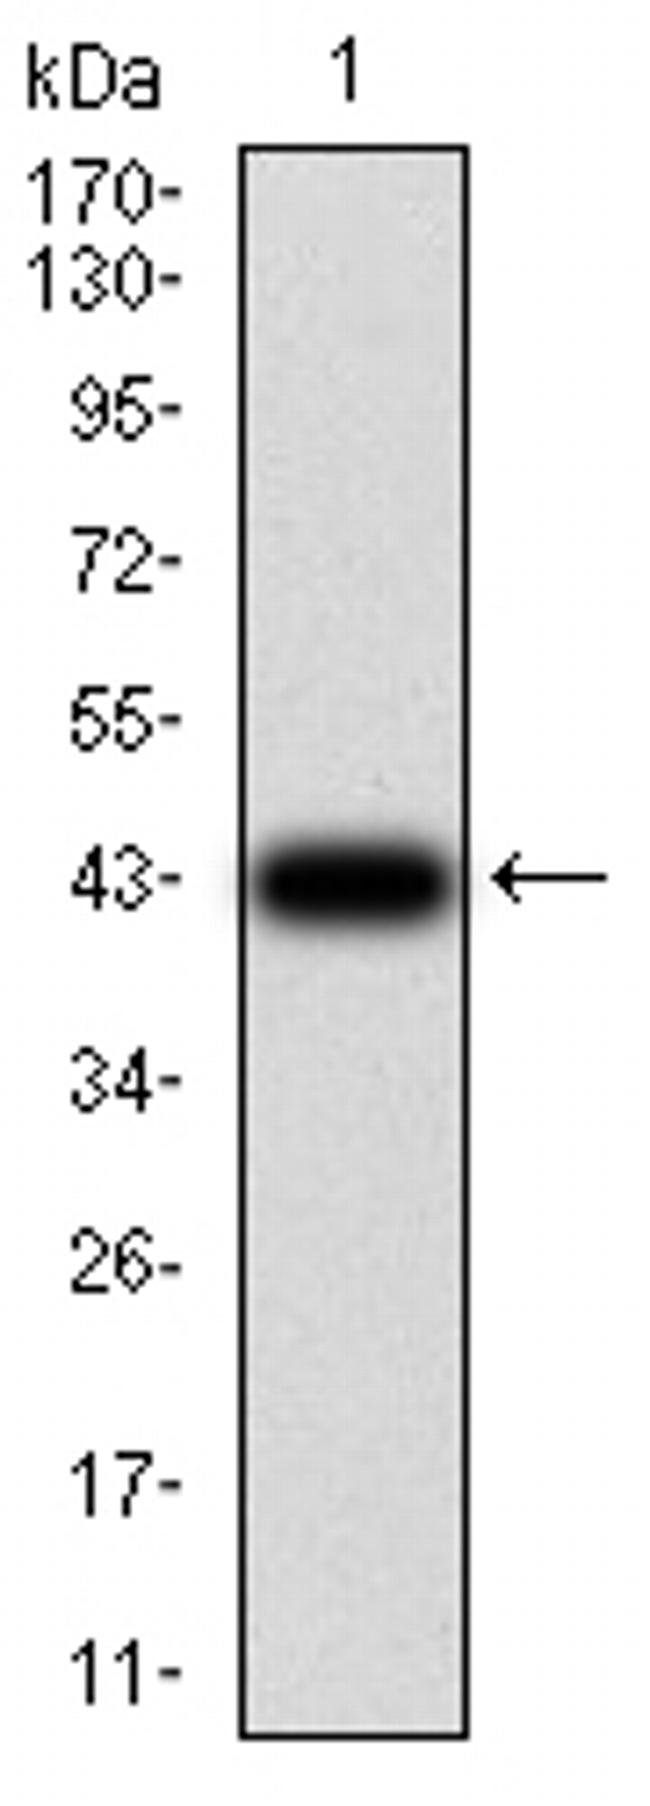 TCF4 Antibody in Western Blot (WB)